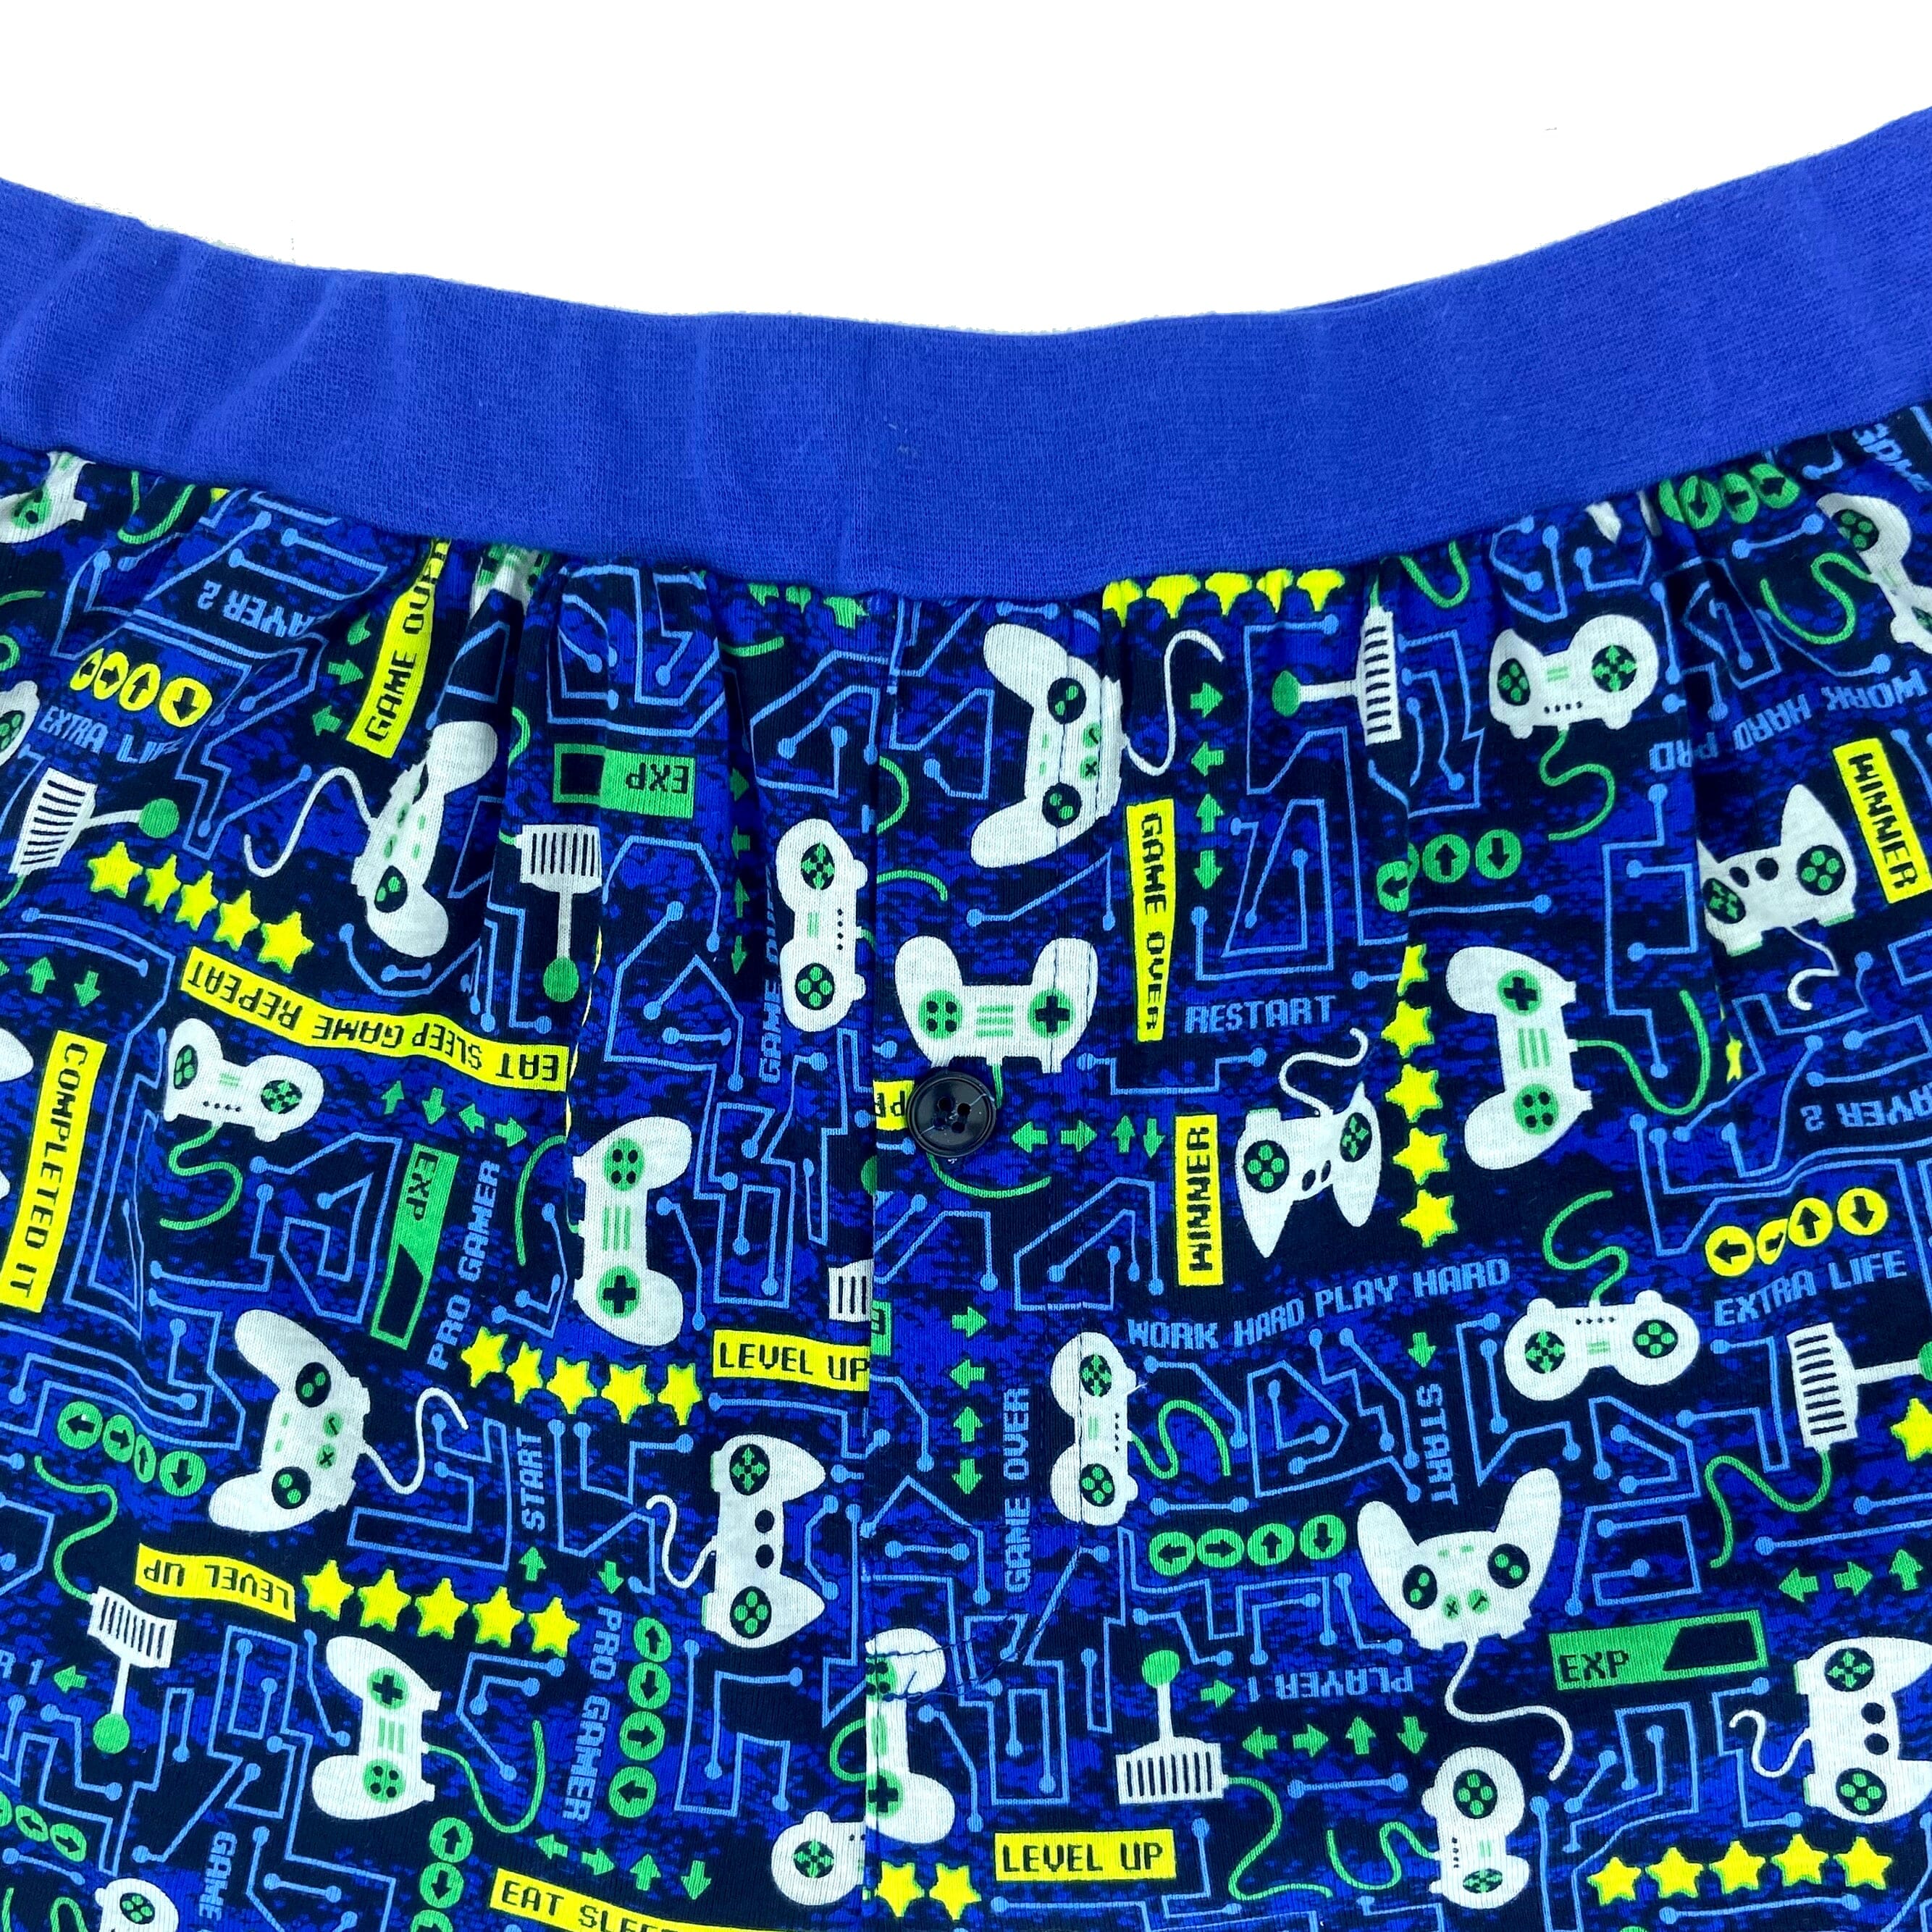 Men's Retro Game Console Print Soft Cotton Knit Pyjama Lounge Shorts